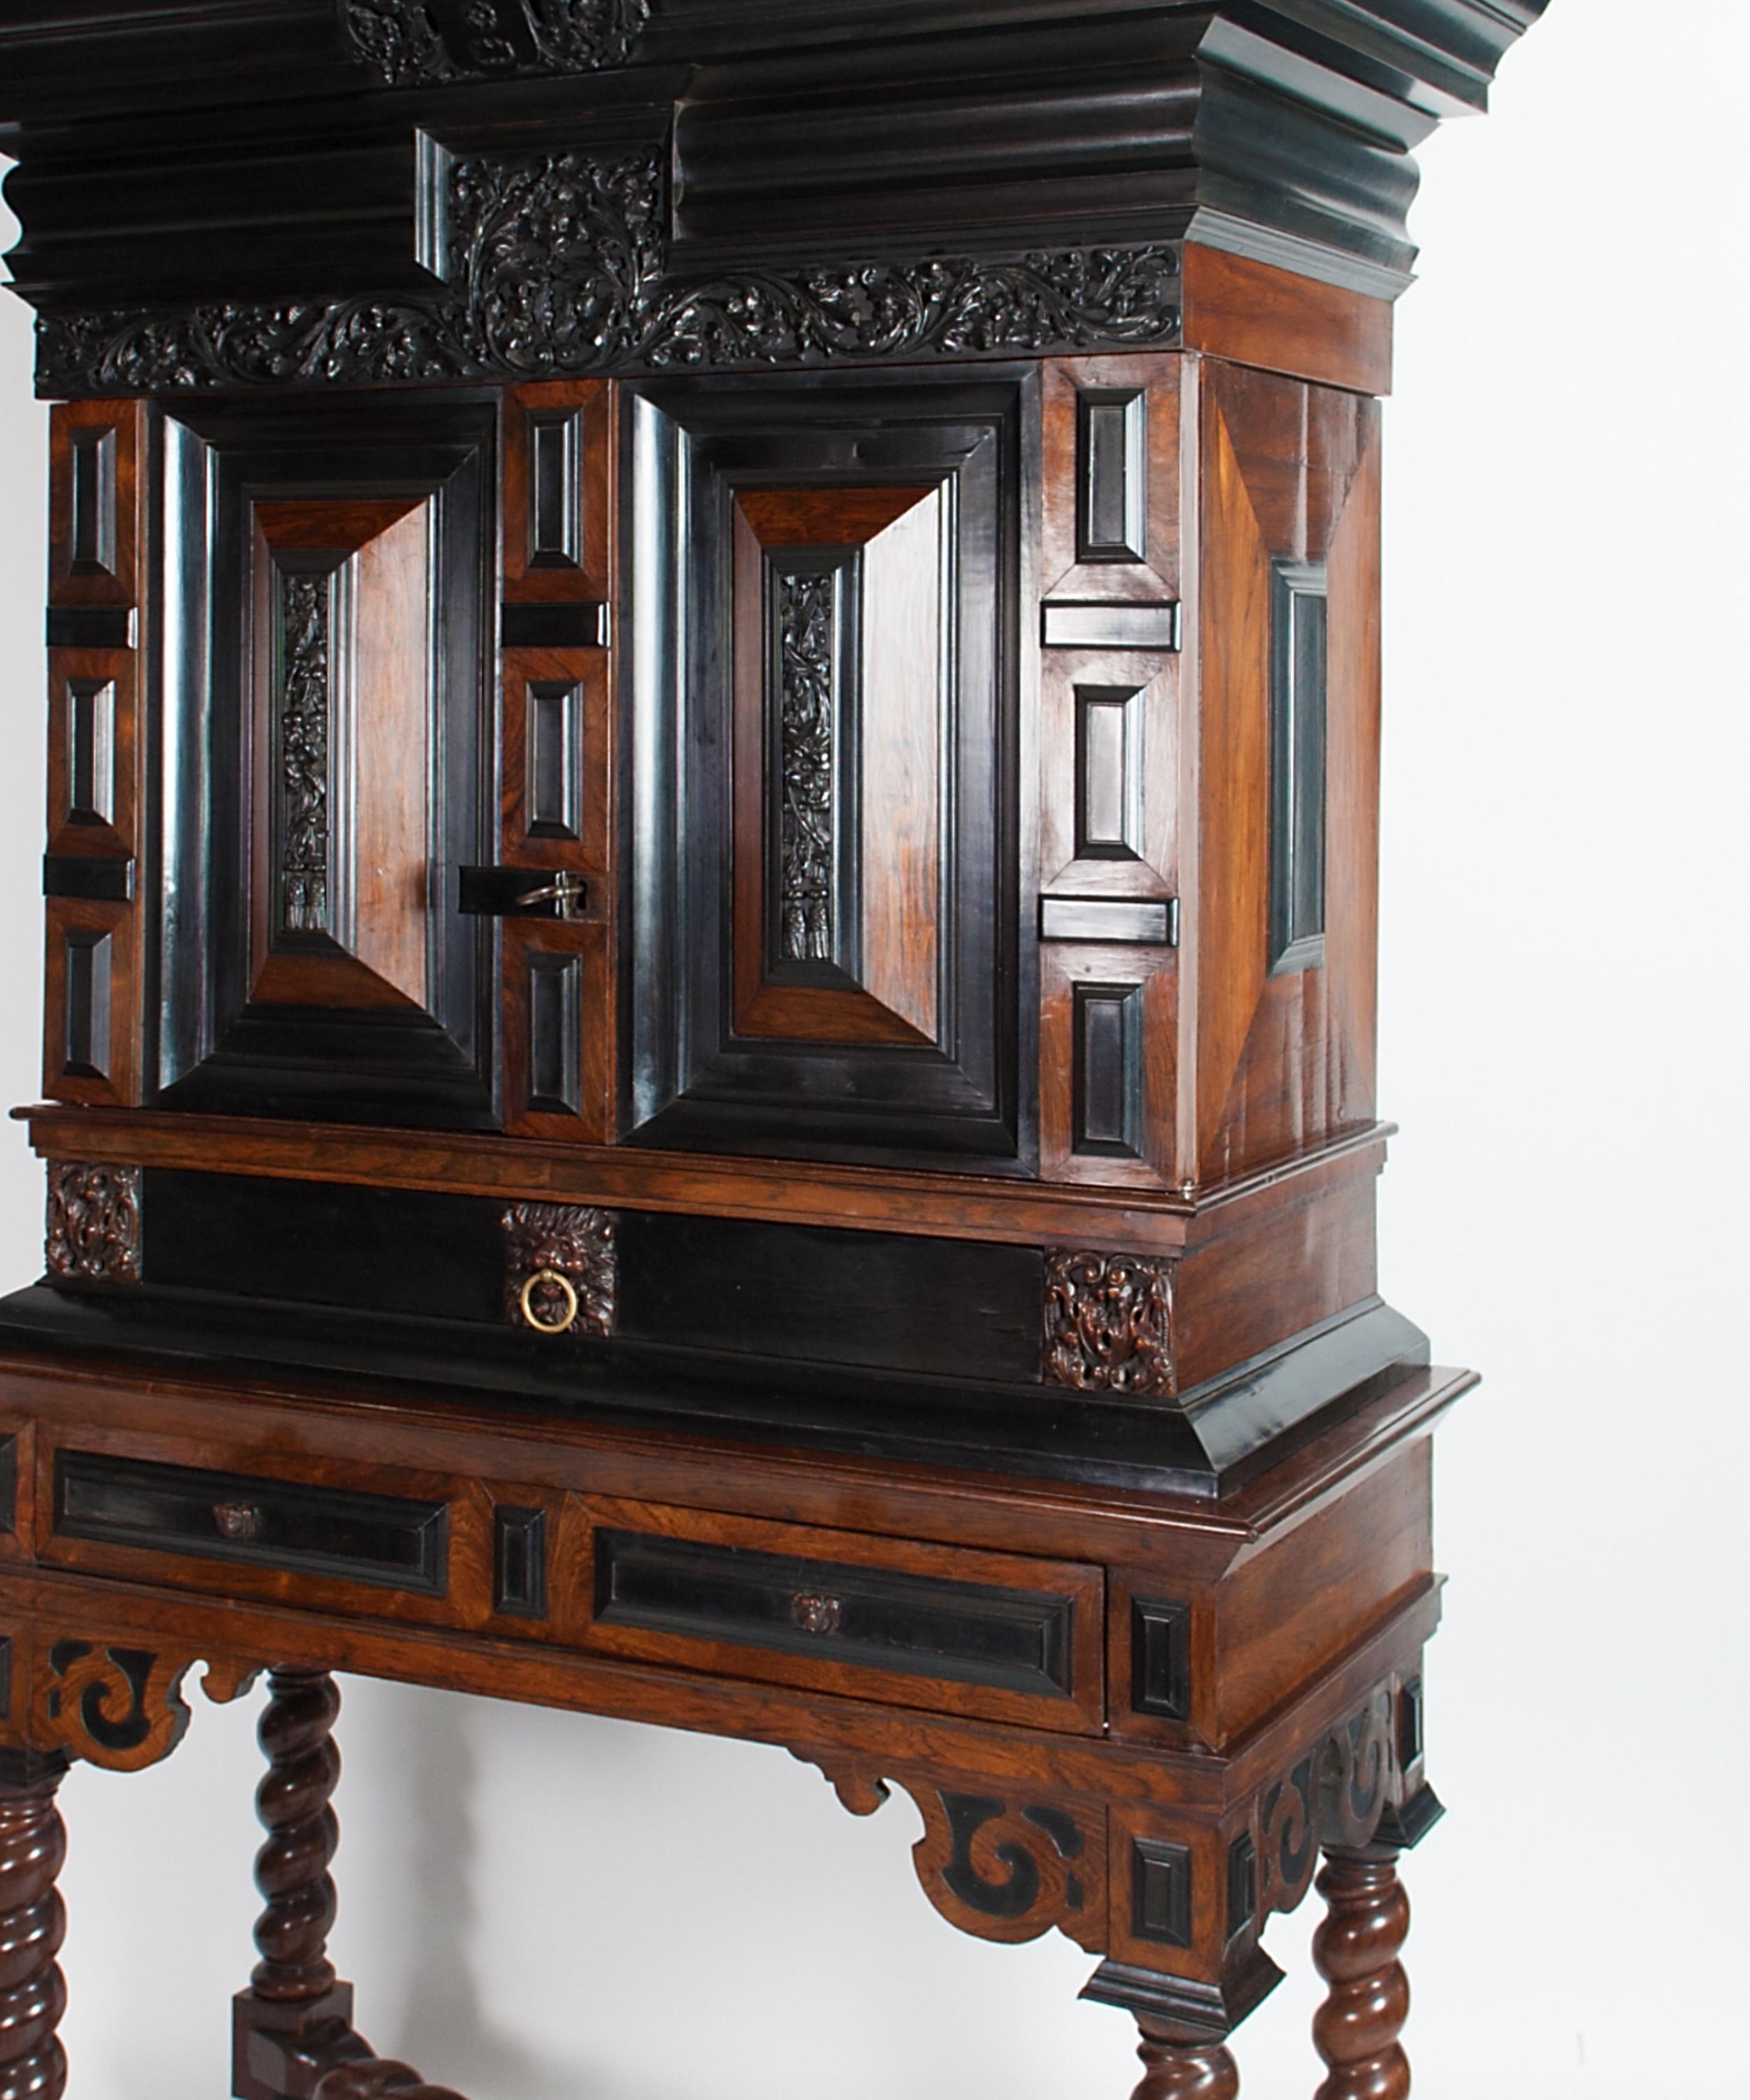 Ebony Rare Dutch 17th Century Cabinet-on-Stand, A So-Called “Kraamkamerkast” For Sale